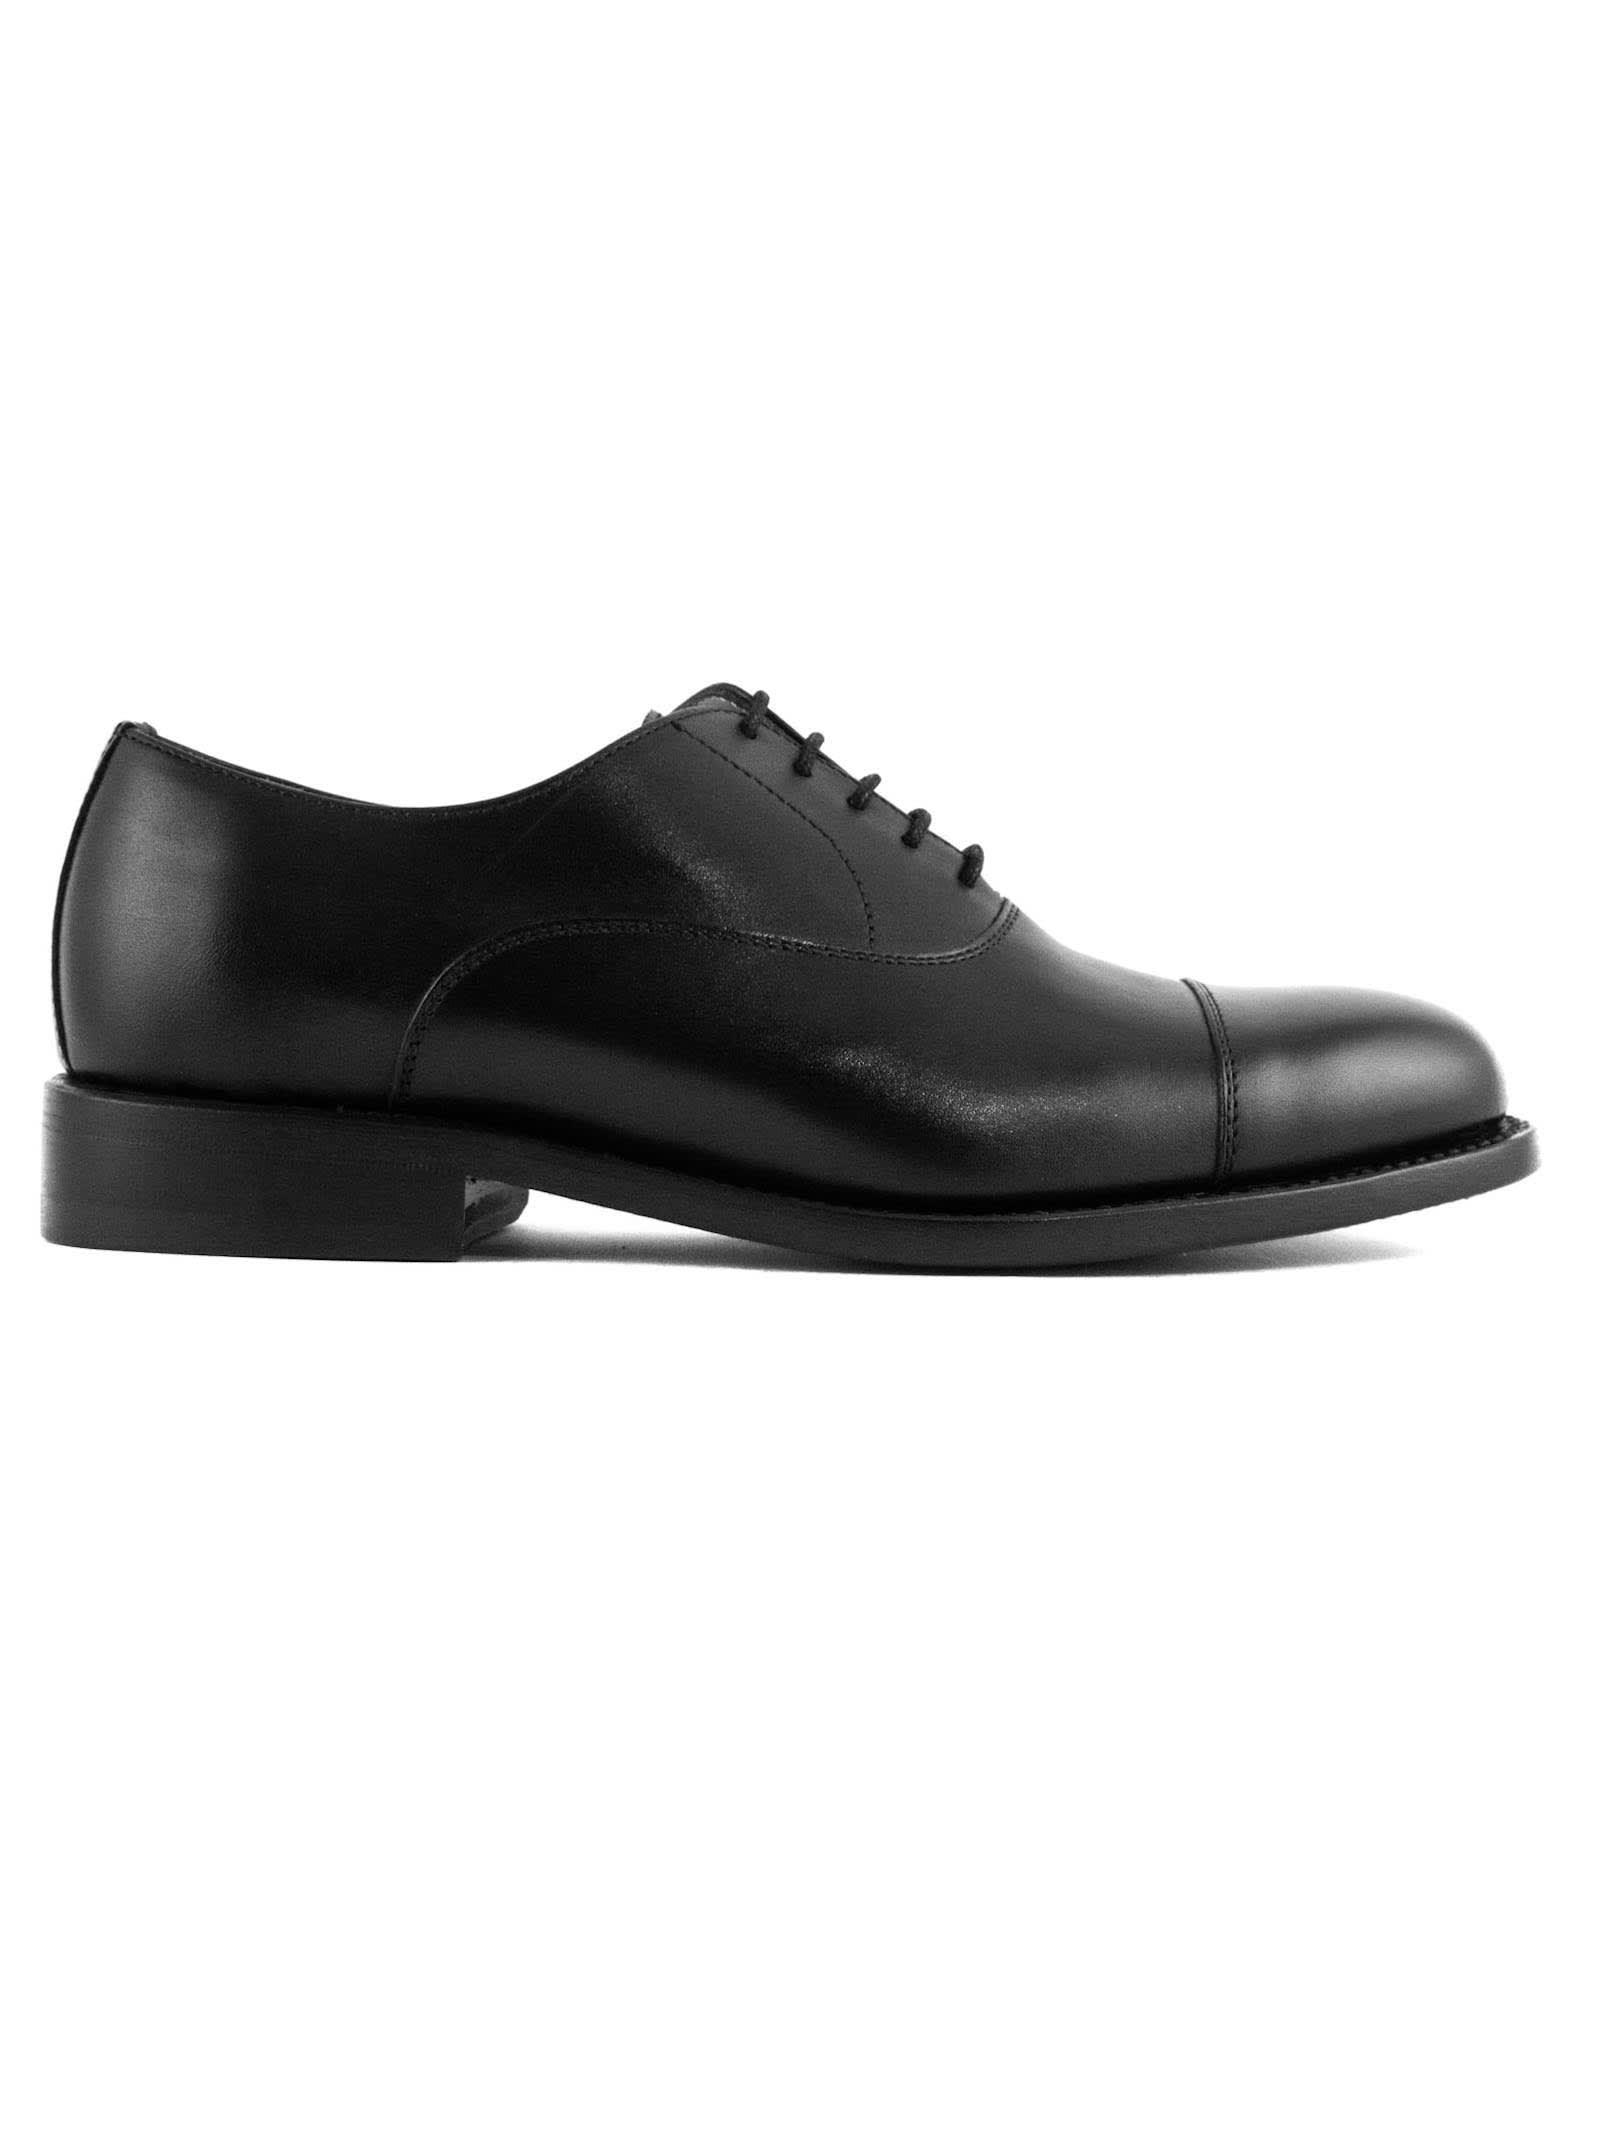 Berwick 1707 Black Calfskin Oxford Style Shoes